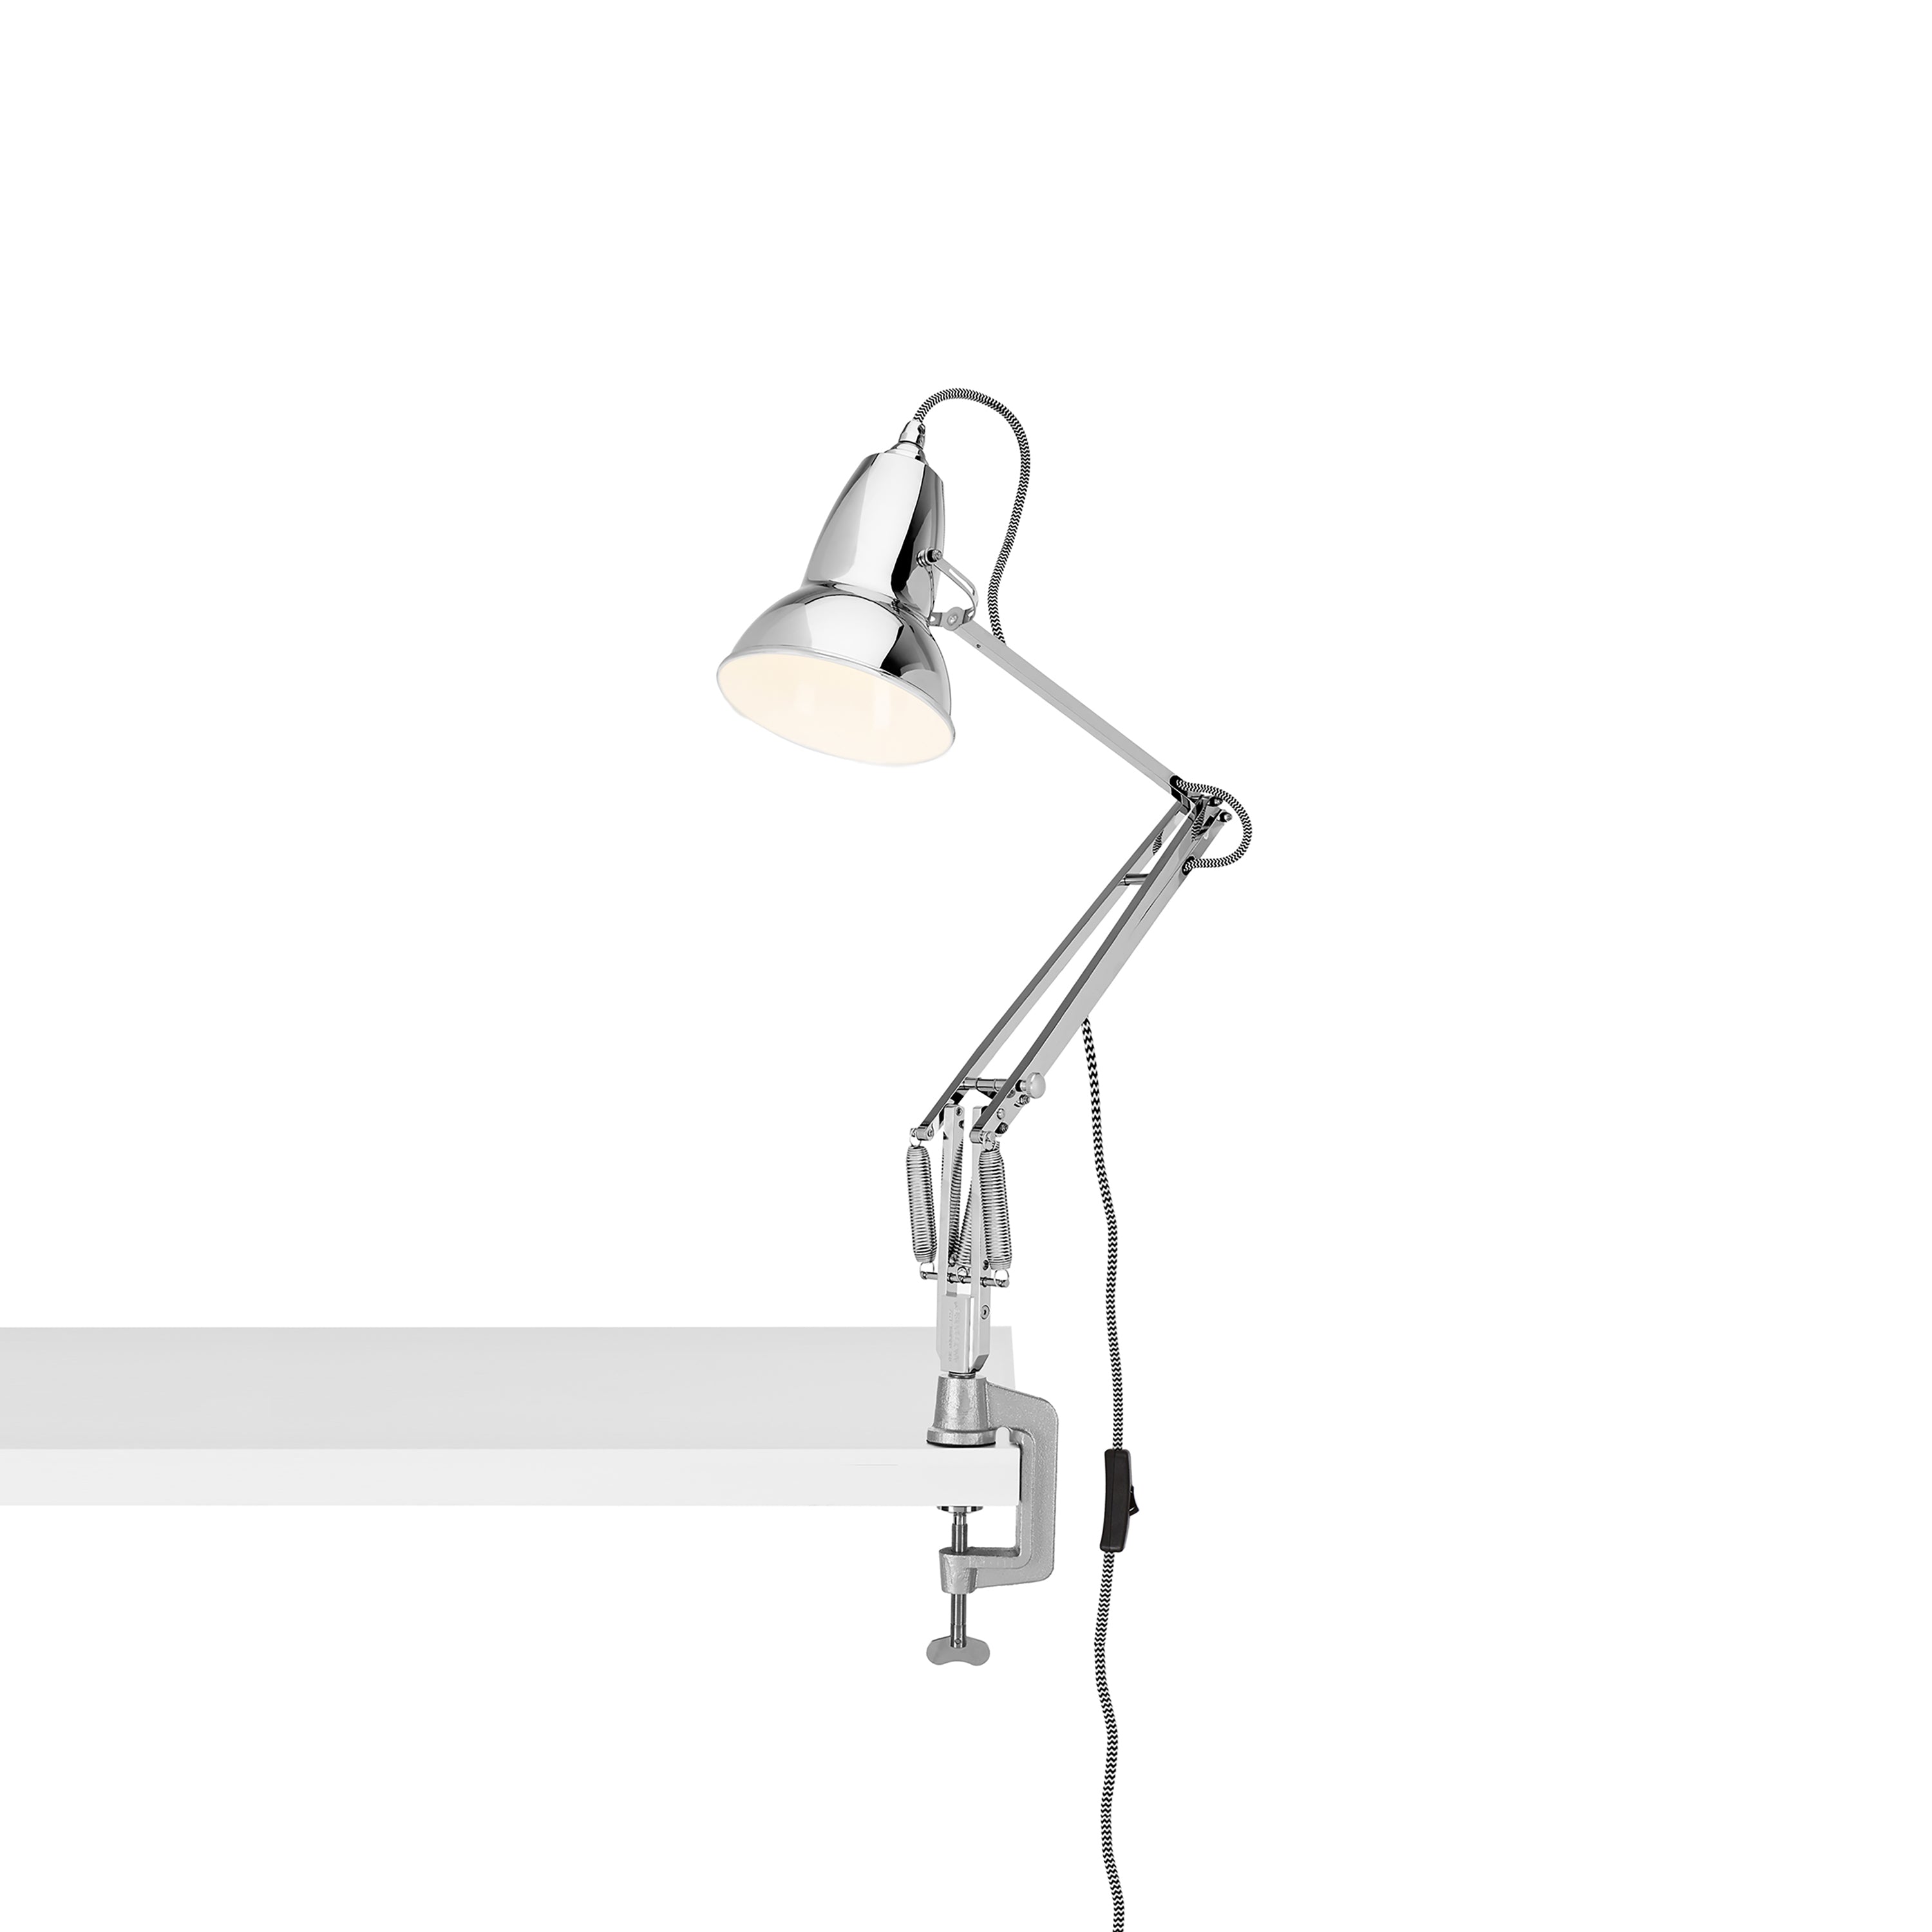 Original 1227 Desk Lamp with Clamp: Bright Chrome